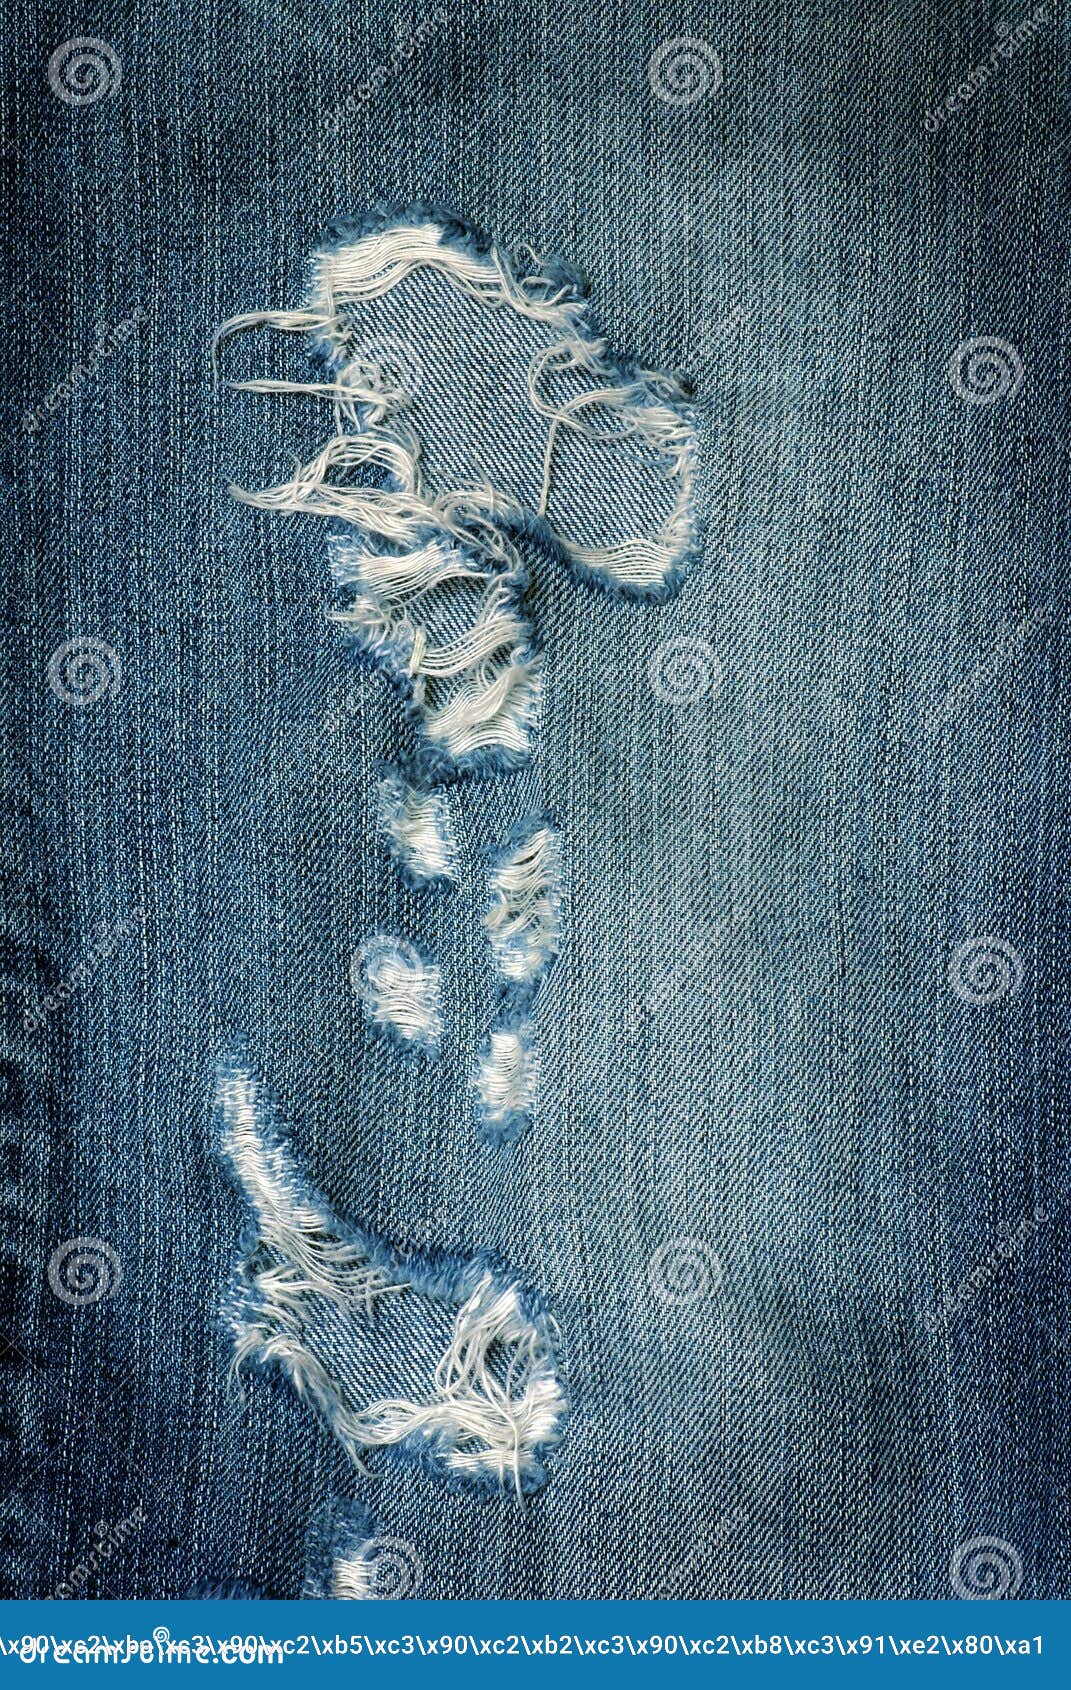 damaged jeans